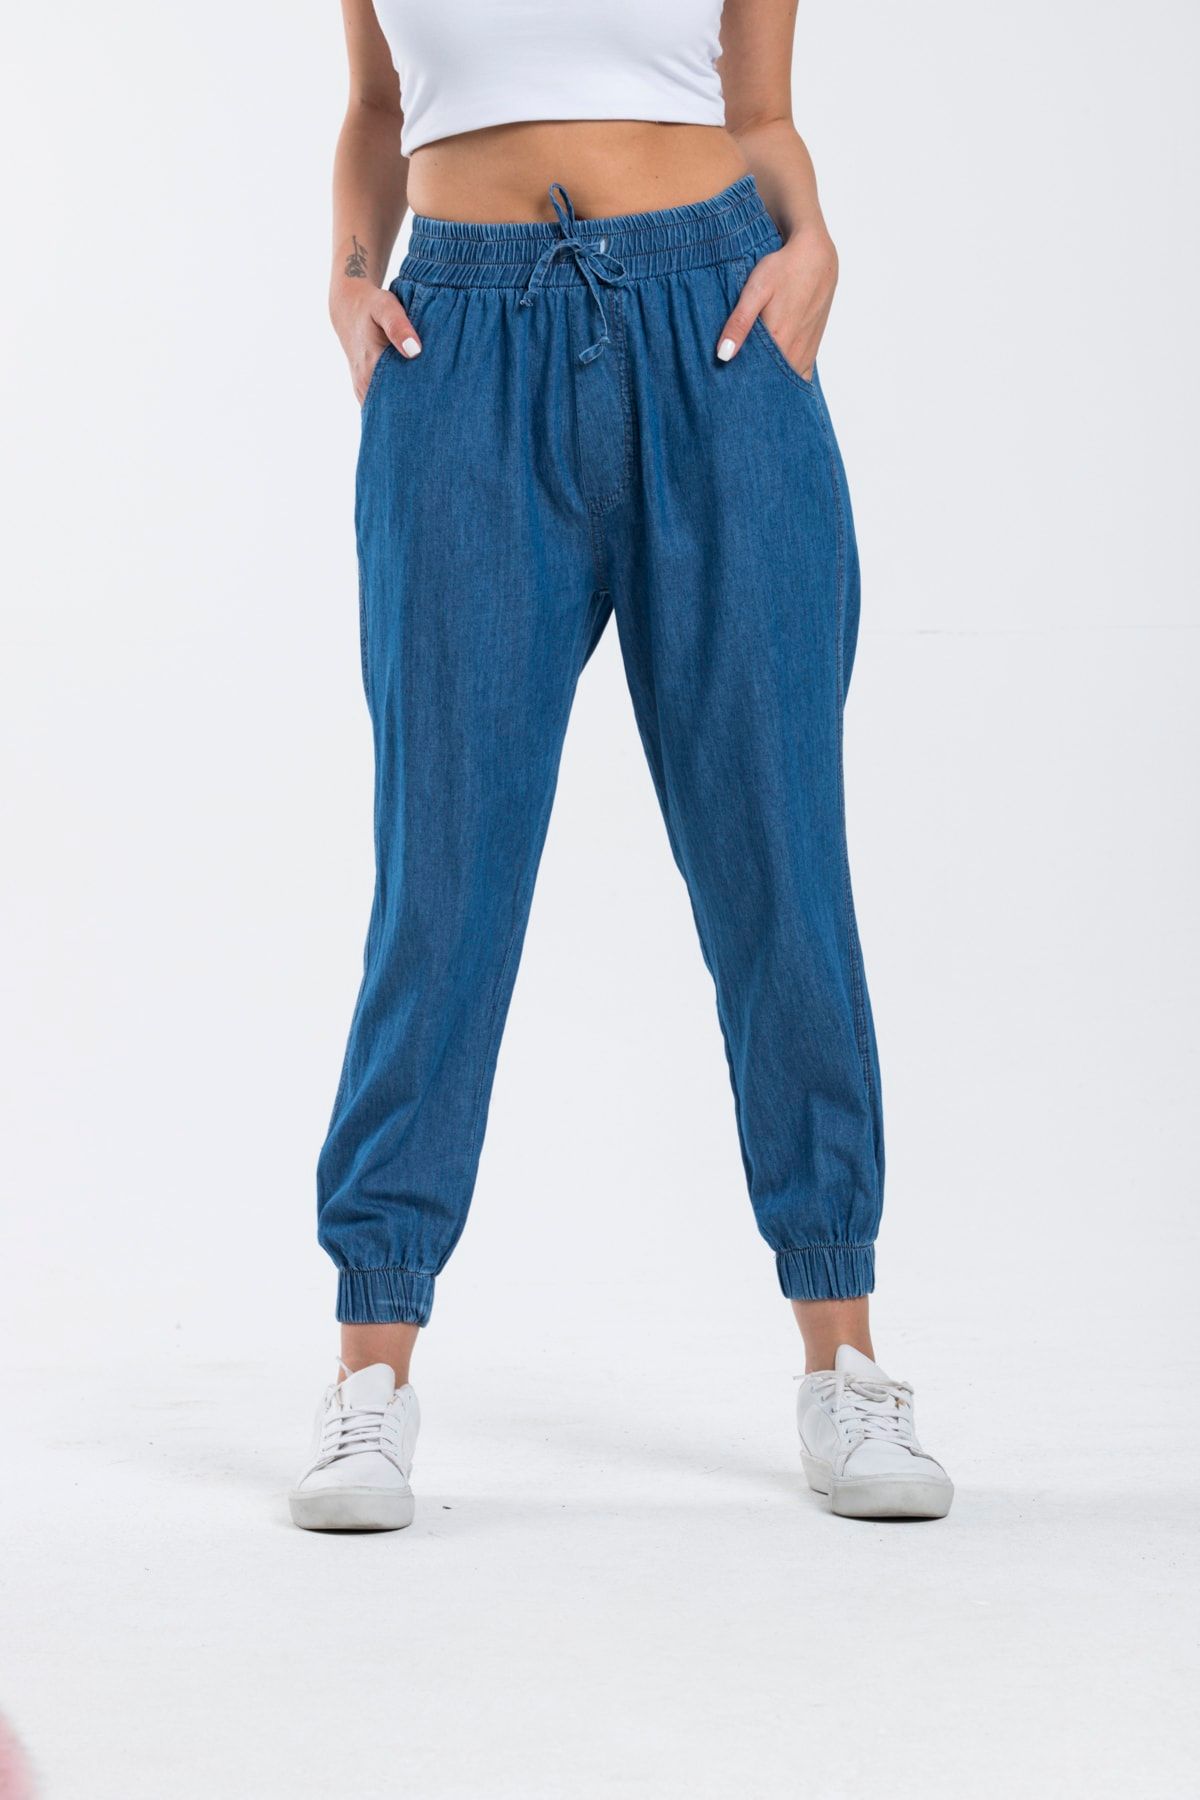 Masteks Kadın Mavi Beli Lastikli Comfort Jeans Kot Pantolon